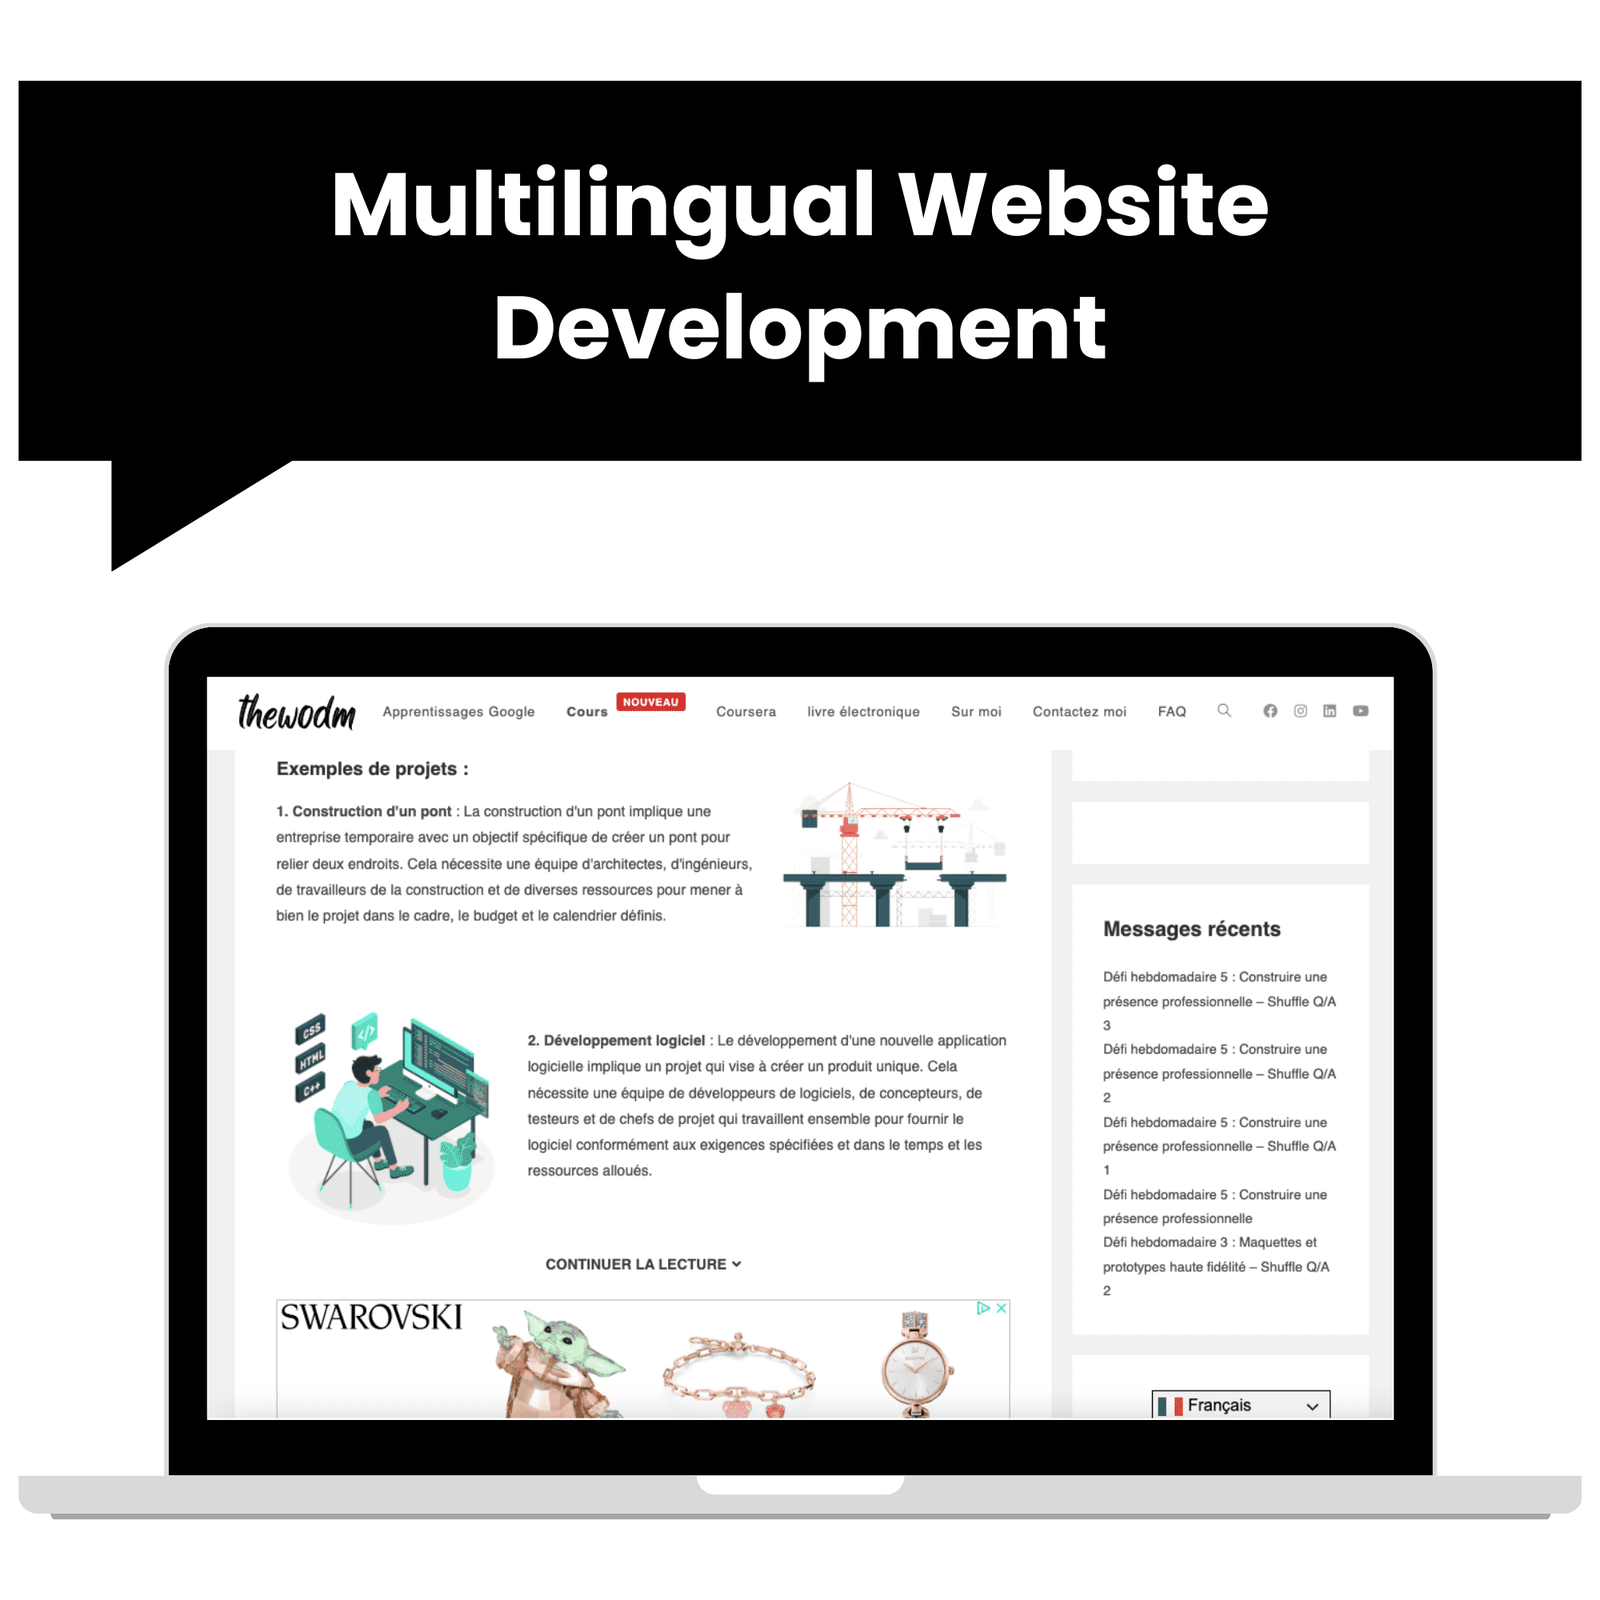 Multilingual Website Development